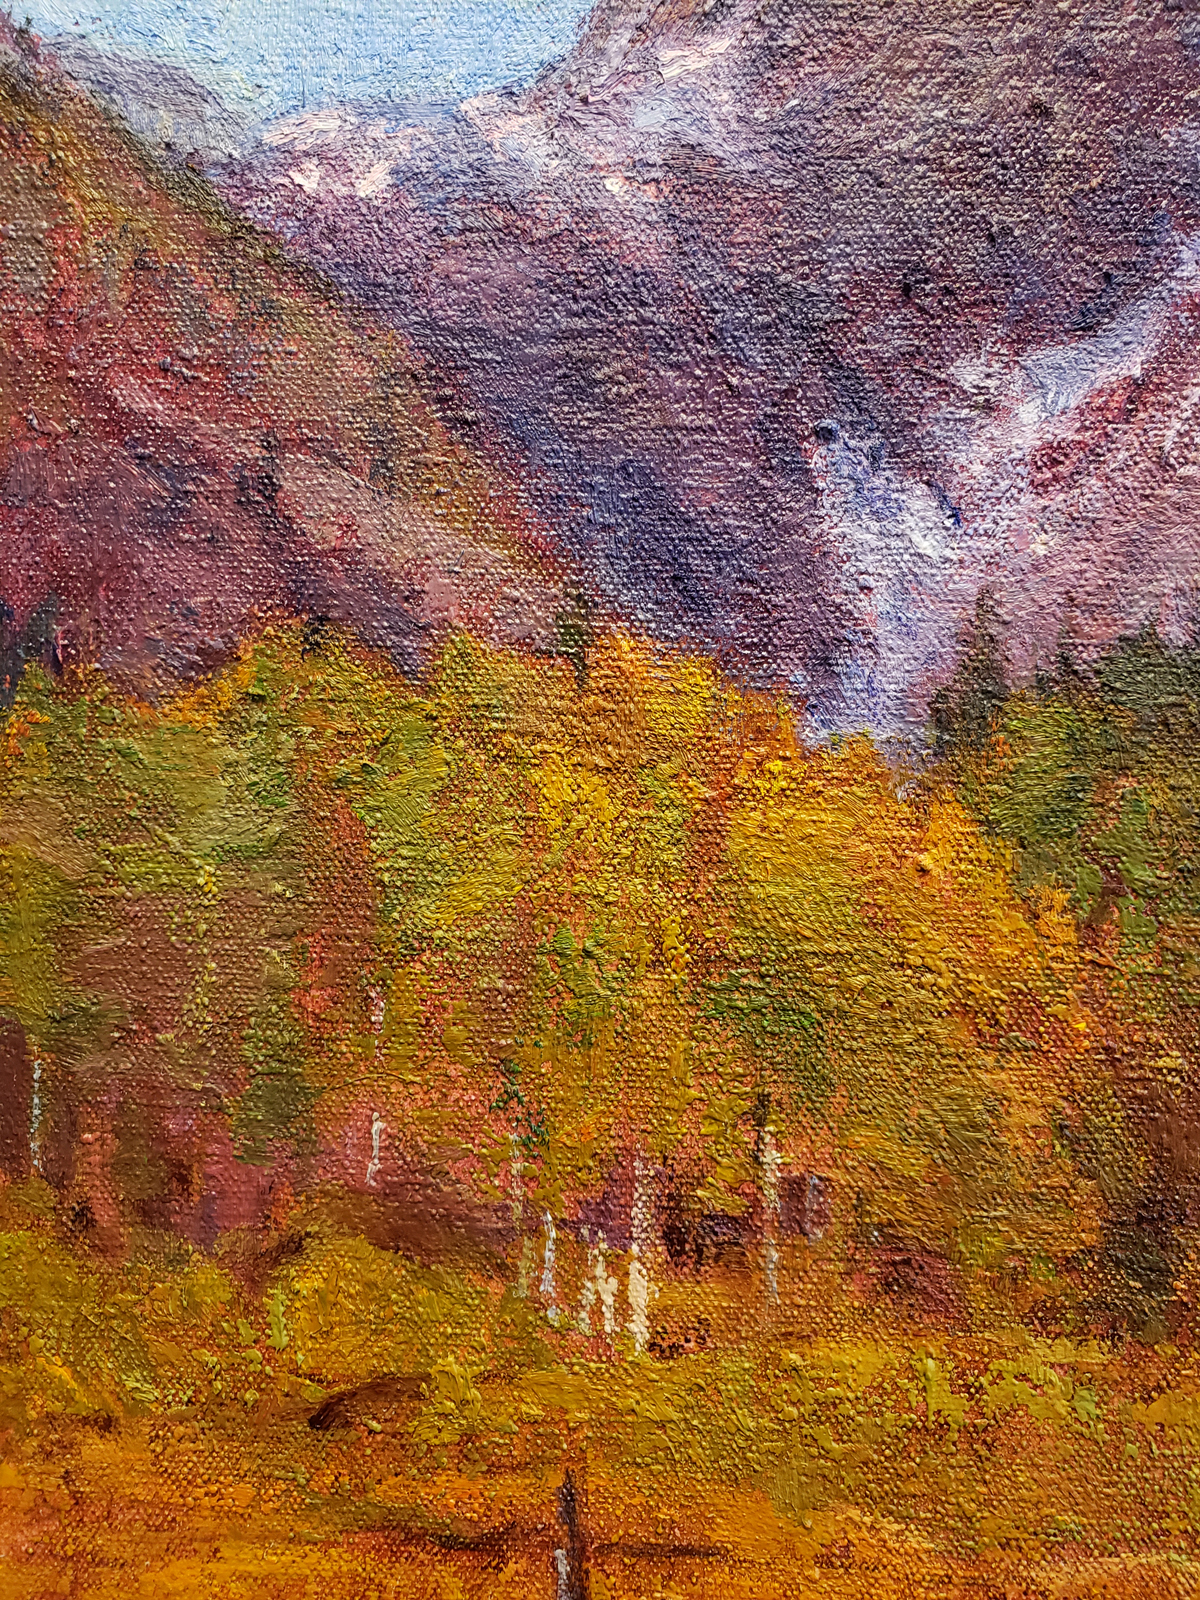 American Legacy Fine Arts presents "Autumn Light; Sierra" a painting by Amy Sidrane.